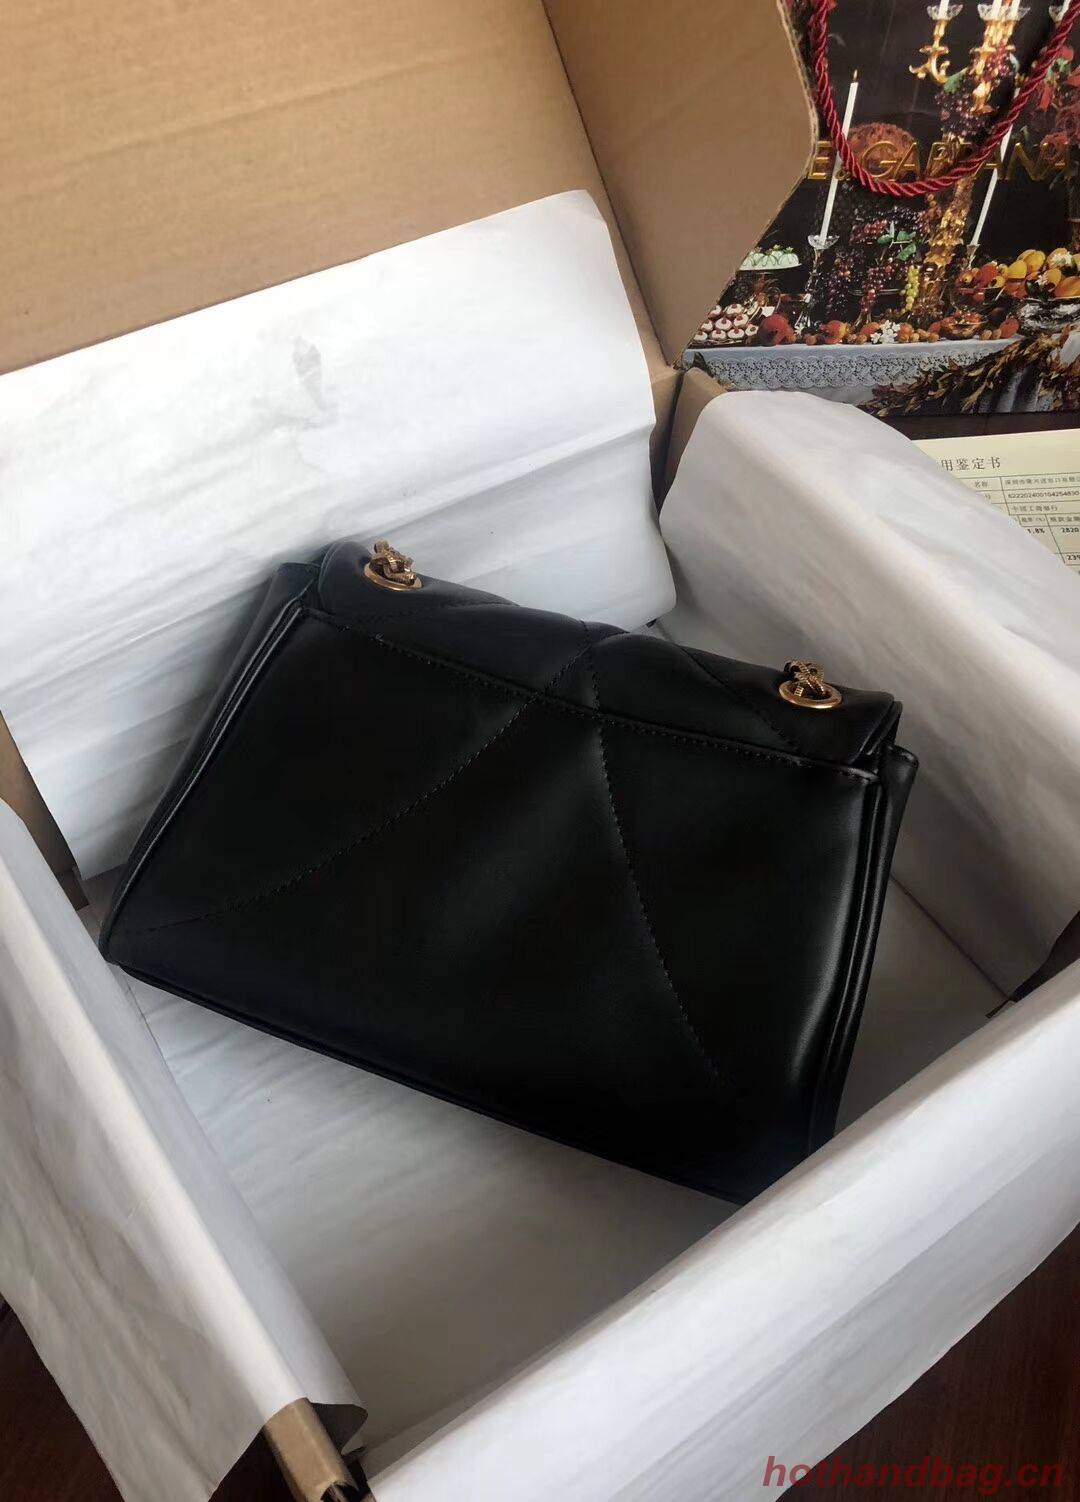 Dolce & Gabbana Origianl Leather Bag 4919 black